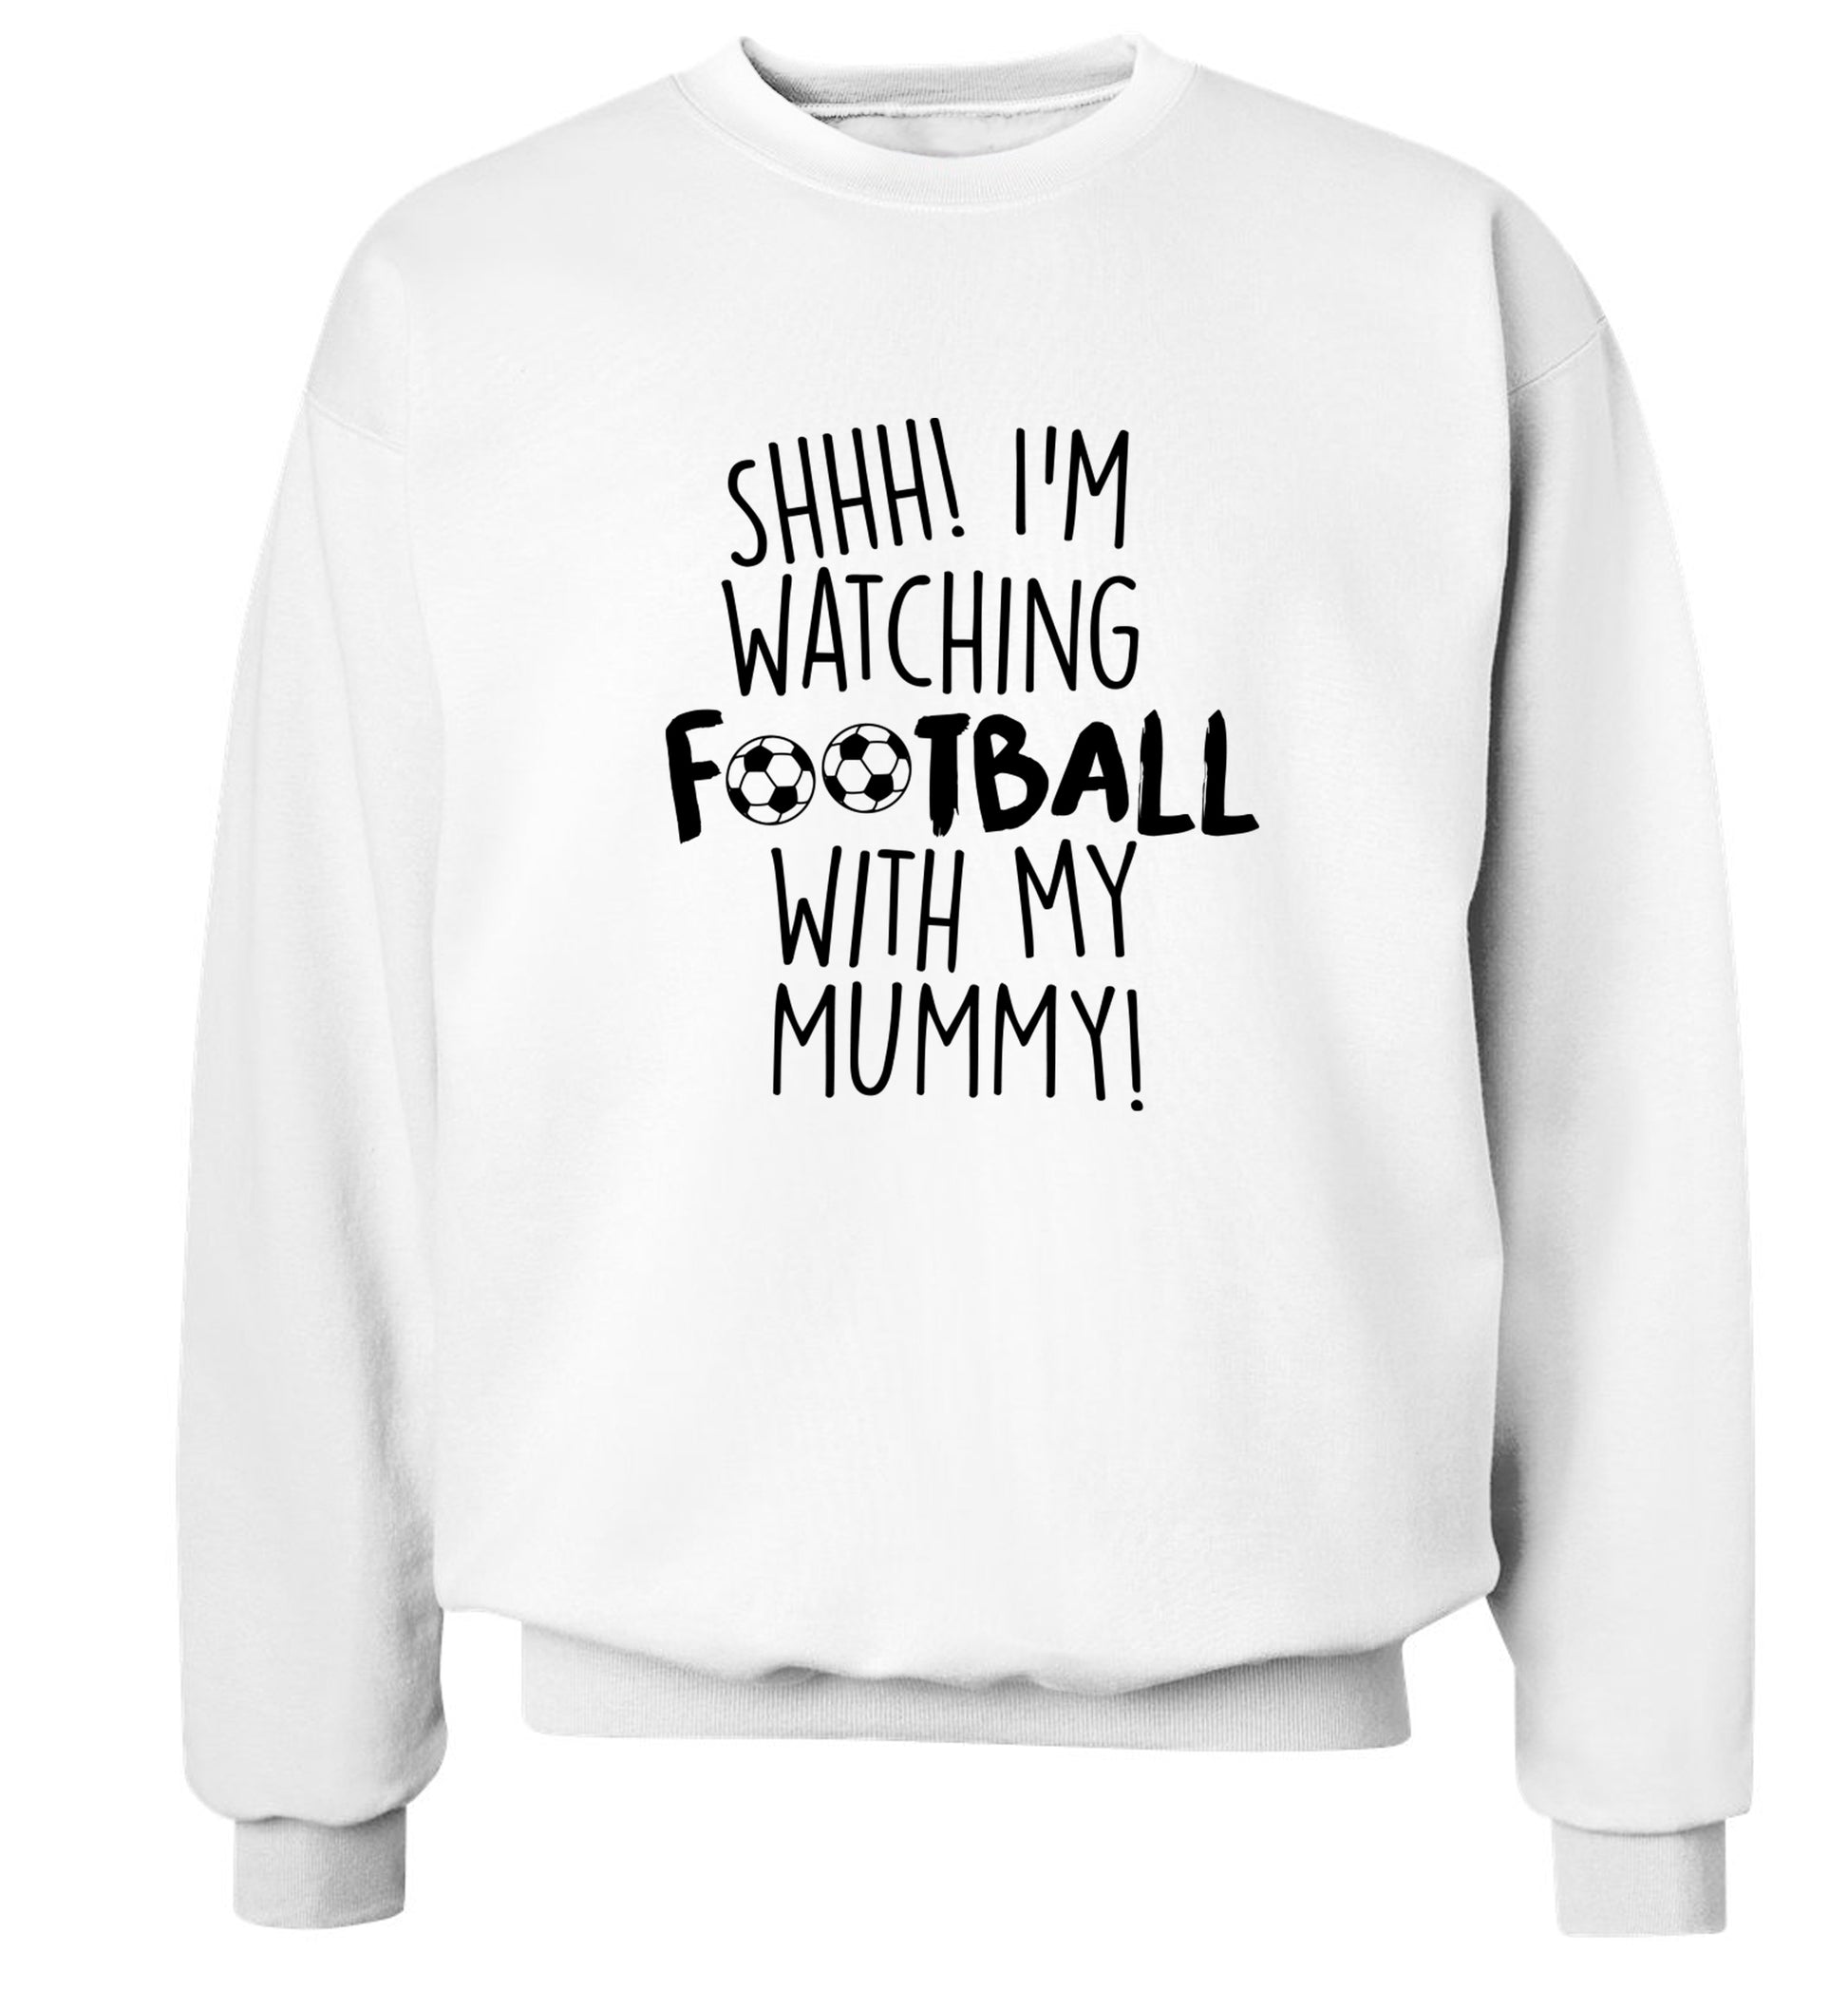 Shhh I'm watching football with my mummy Adult's unisexwhite Sweater 2XL